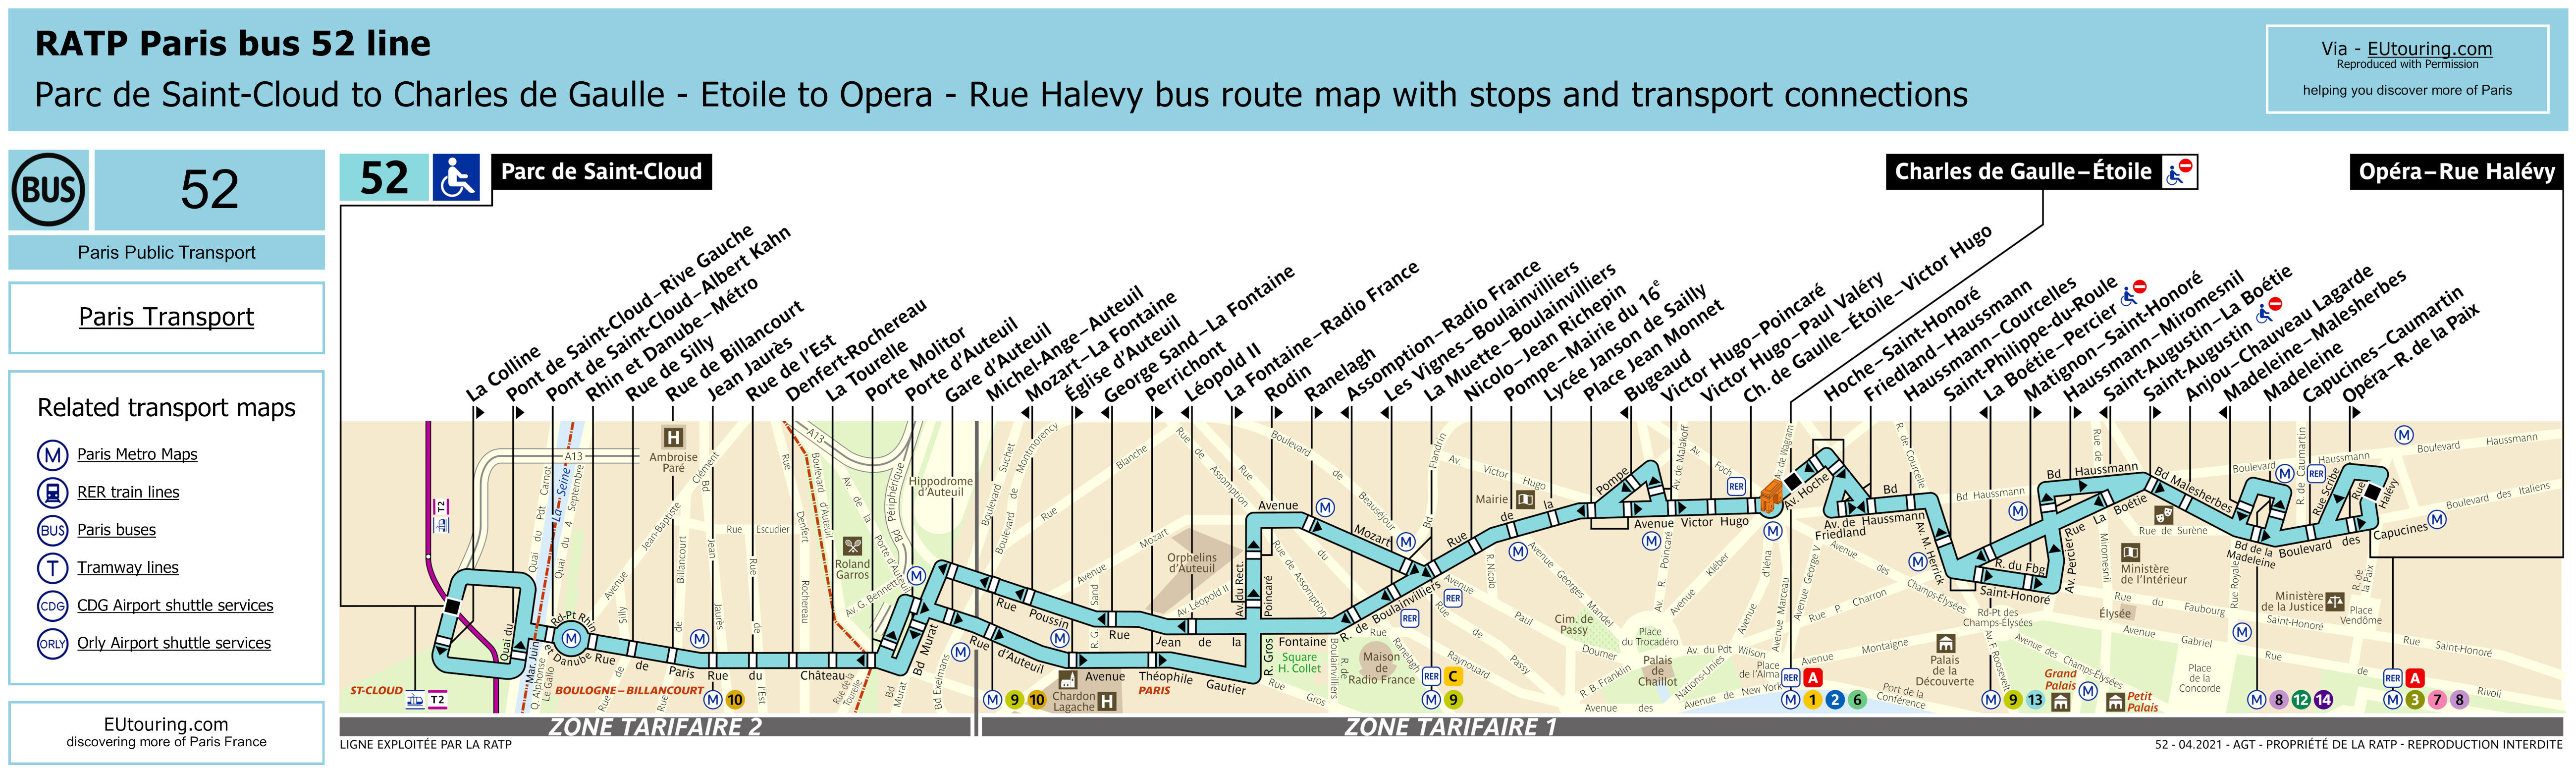 ratp route maps for paris bus lines 50 through to 59